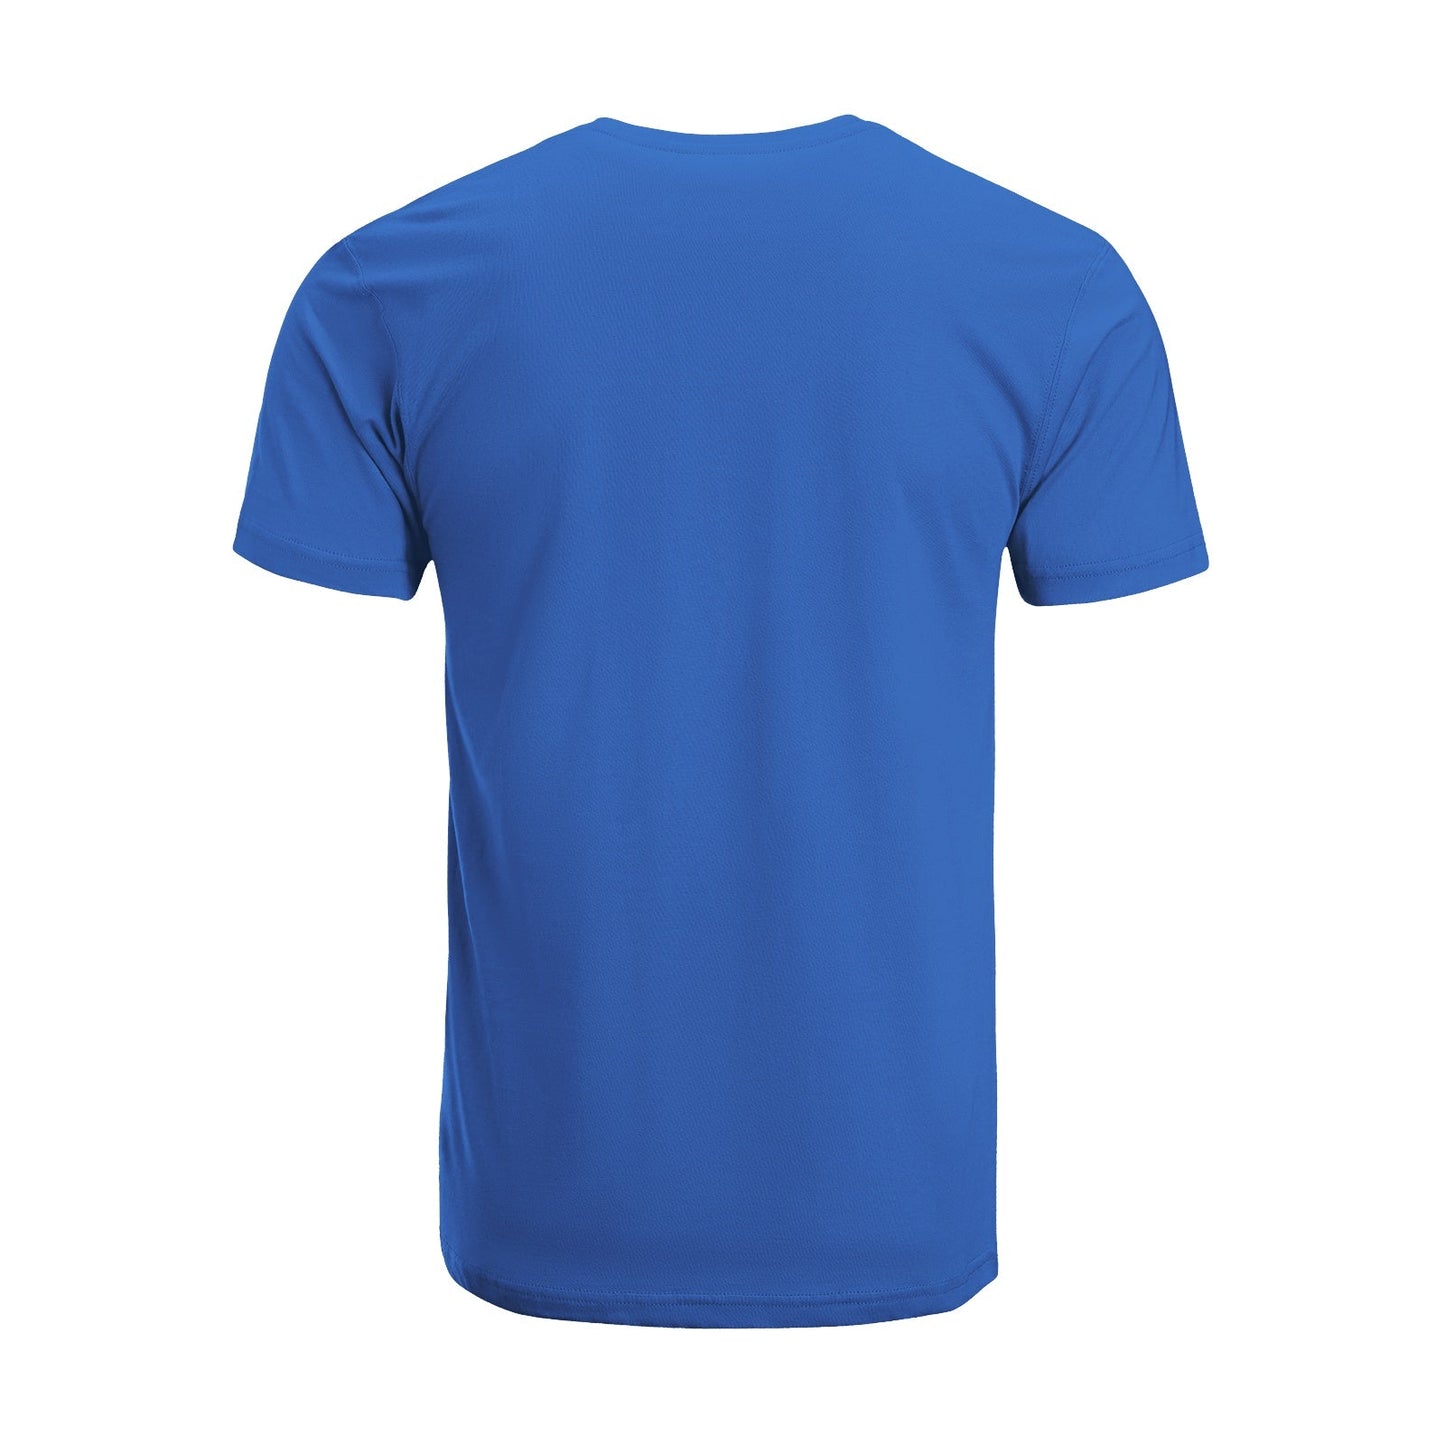 Unisex Short Sleeve Crew Neck Cotton Jersey T-Shirt VEGAN 13